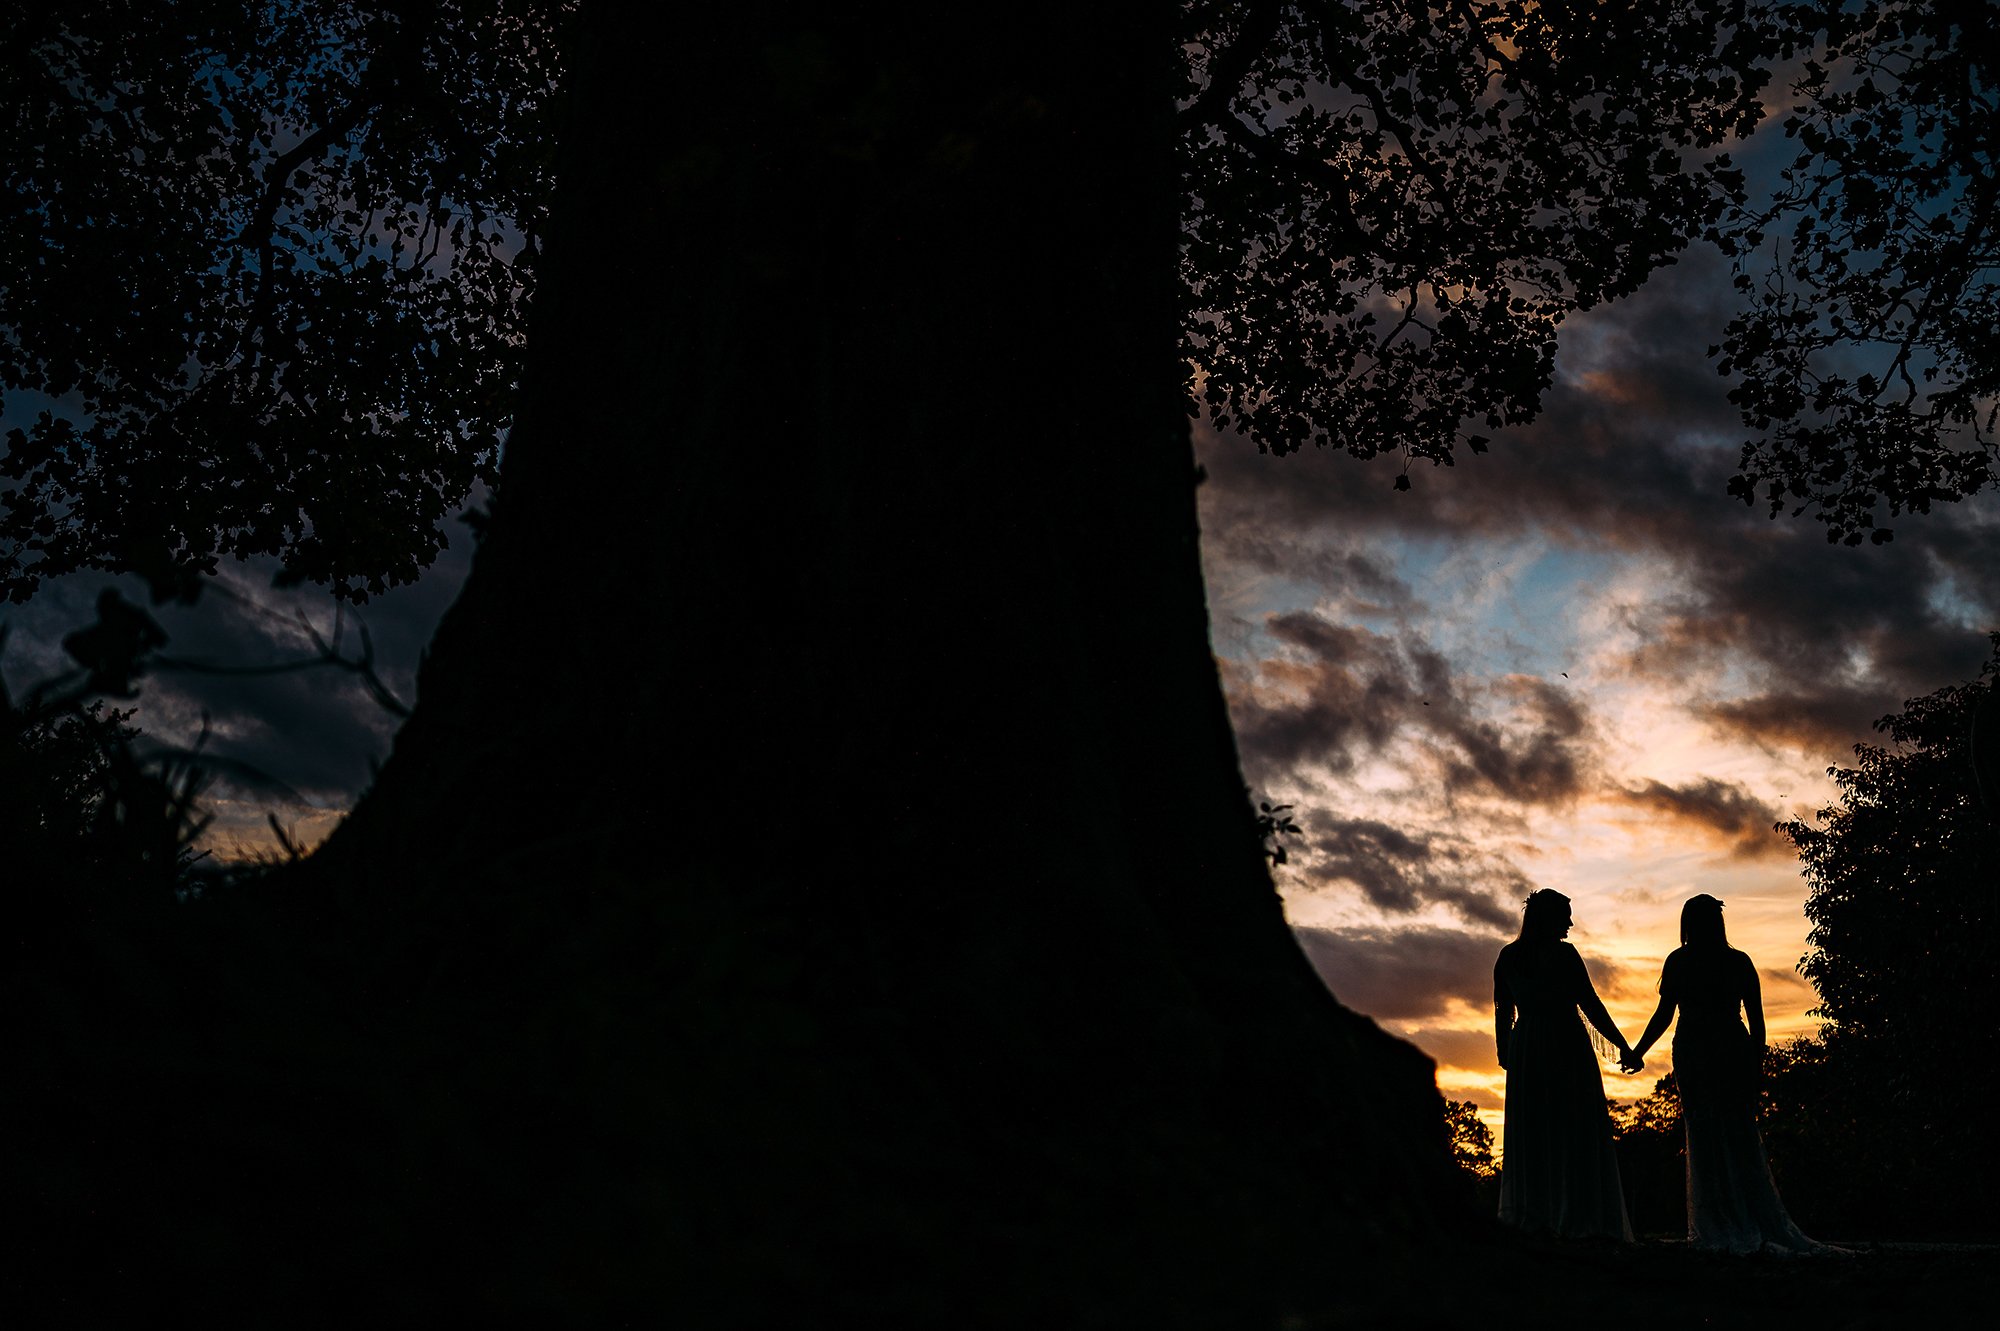  2 brides sunset silhouette. 